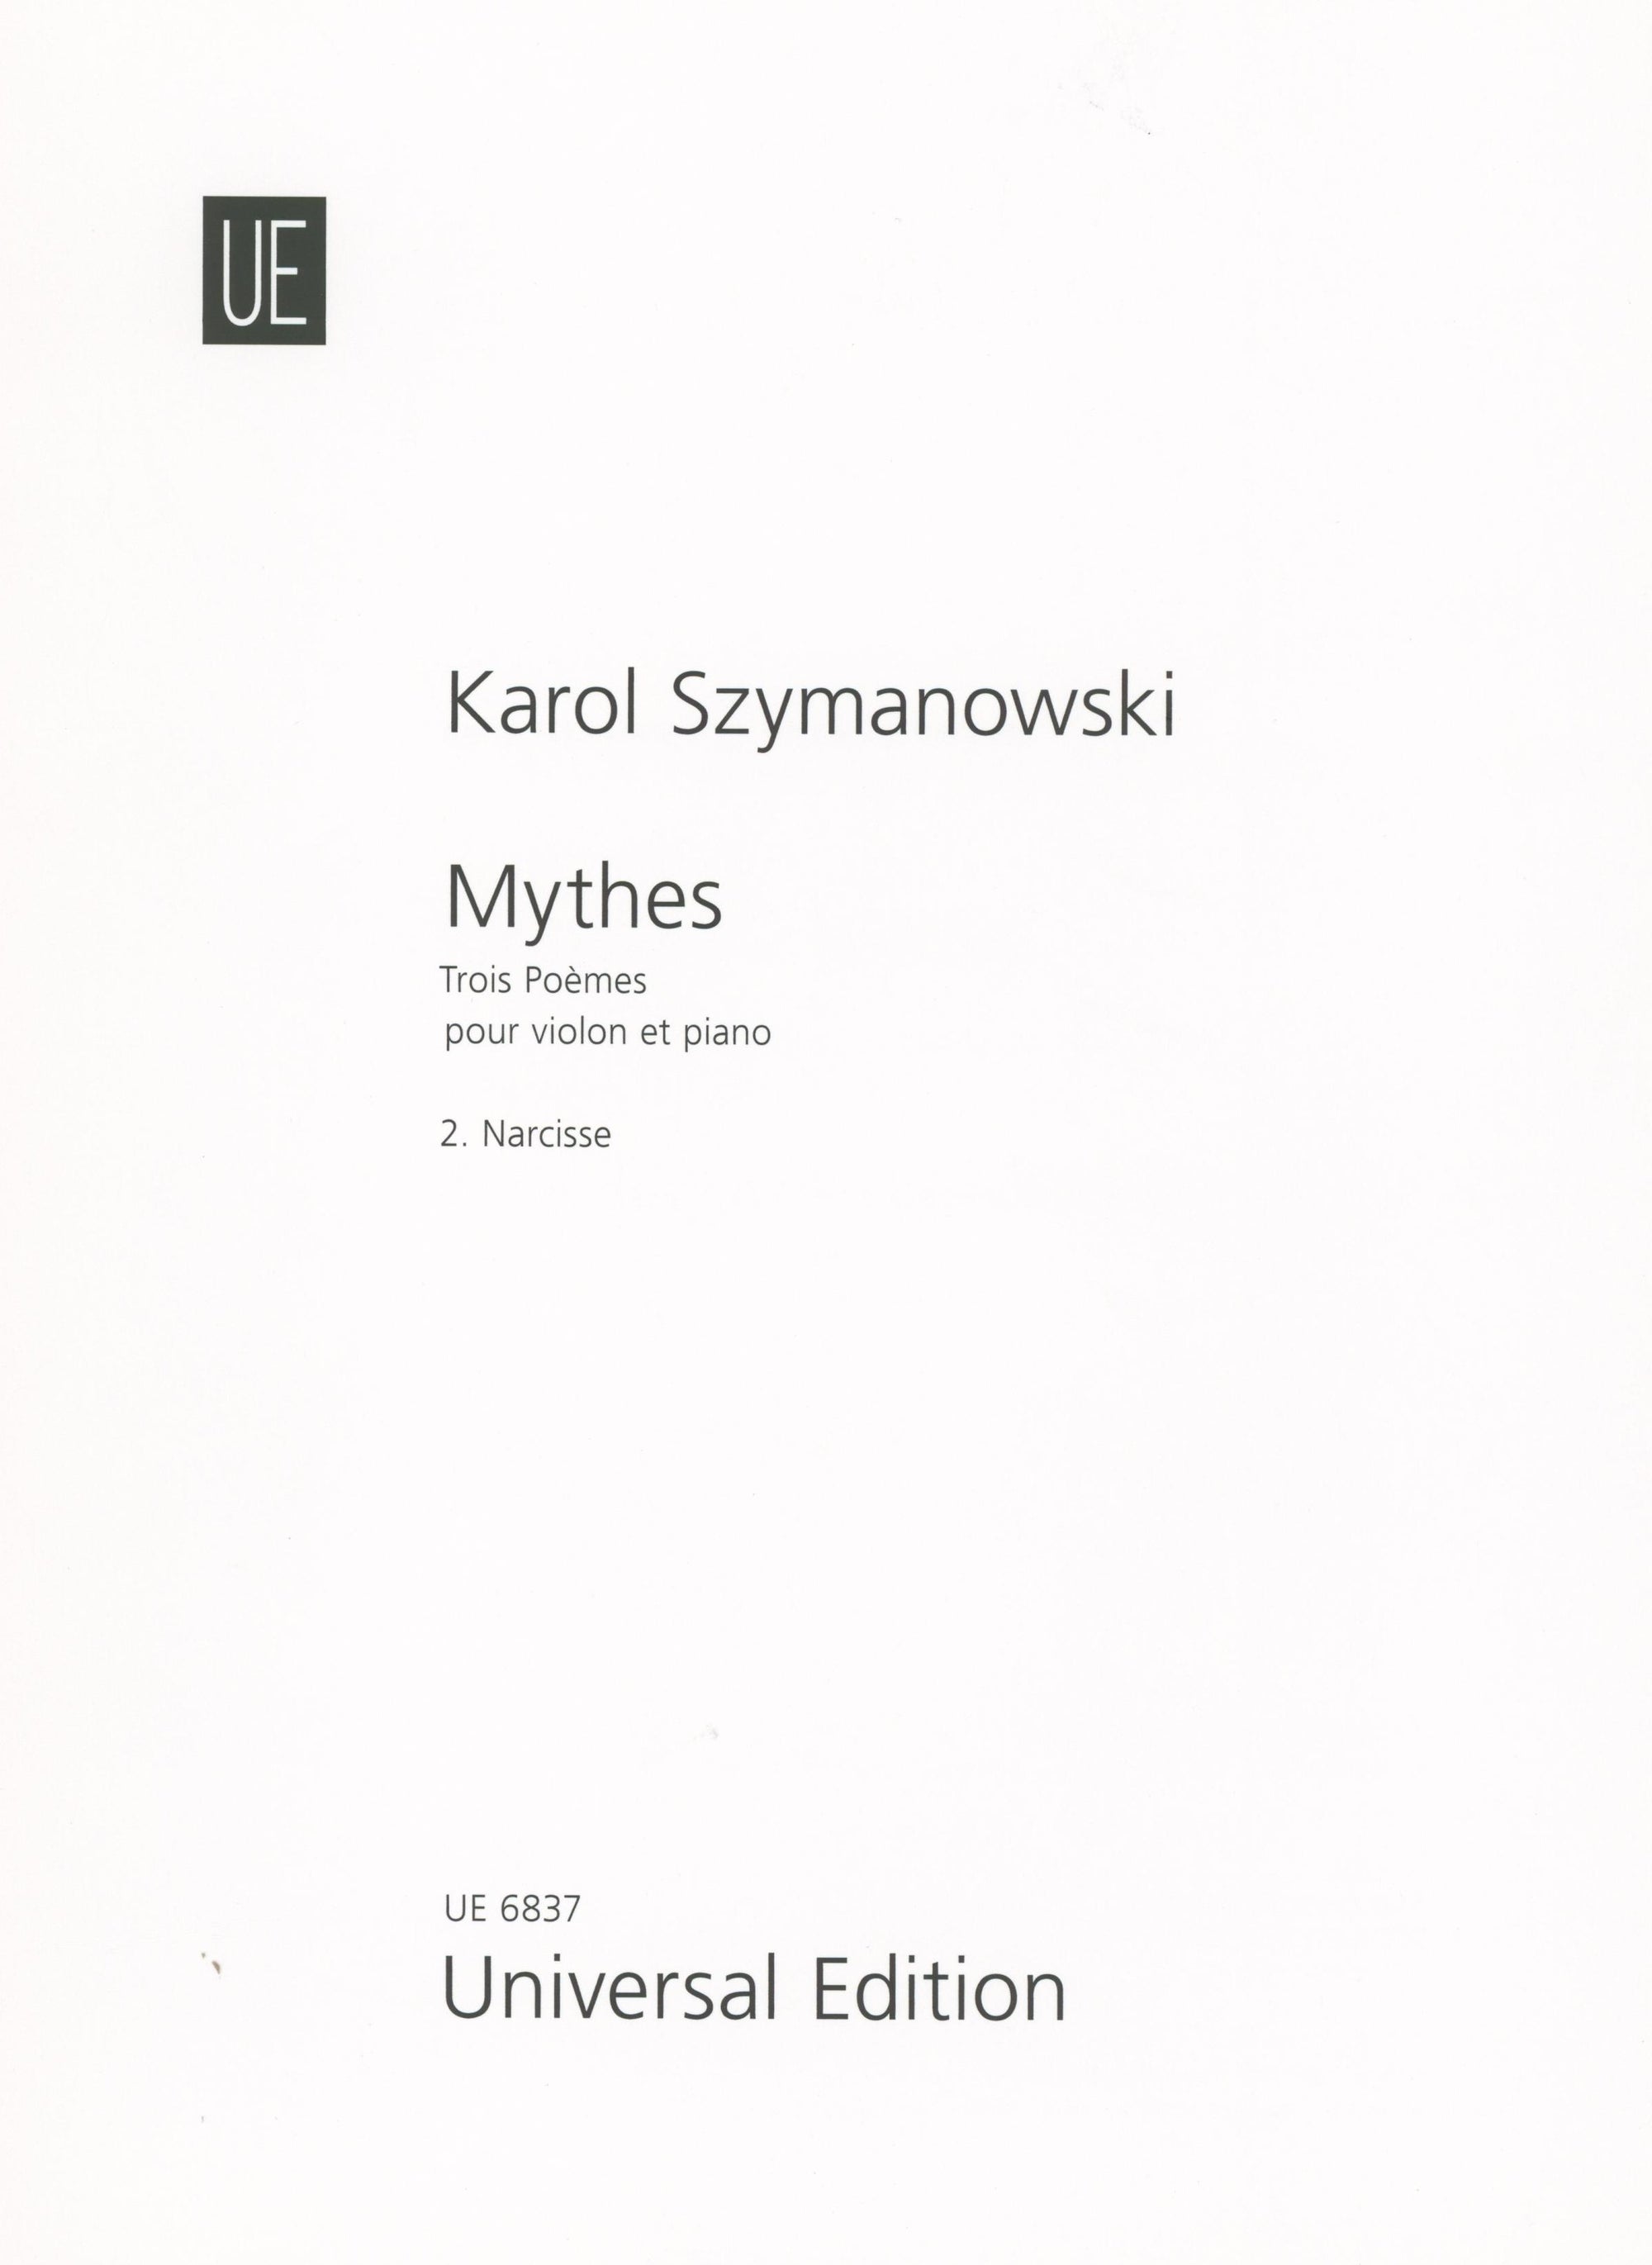 Szymanowski: Narcisse, Op. 30, No. 2